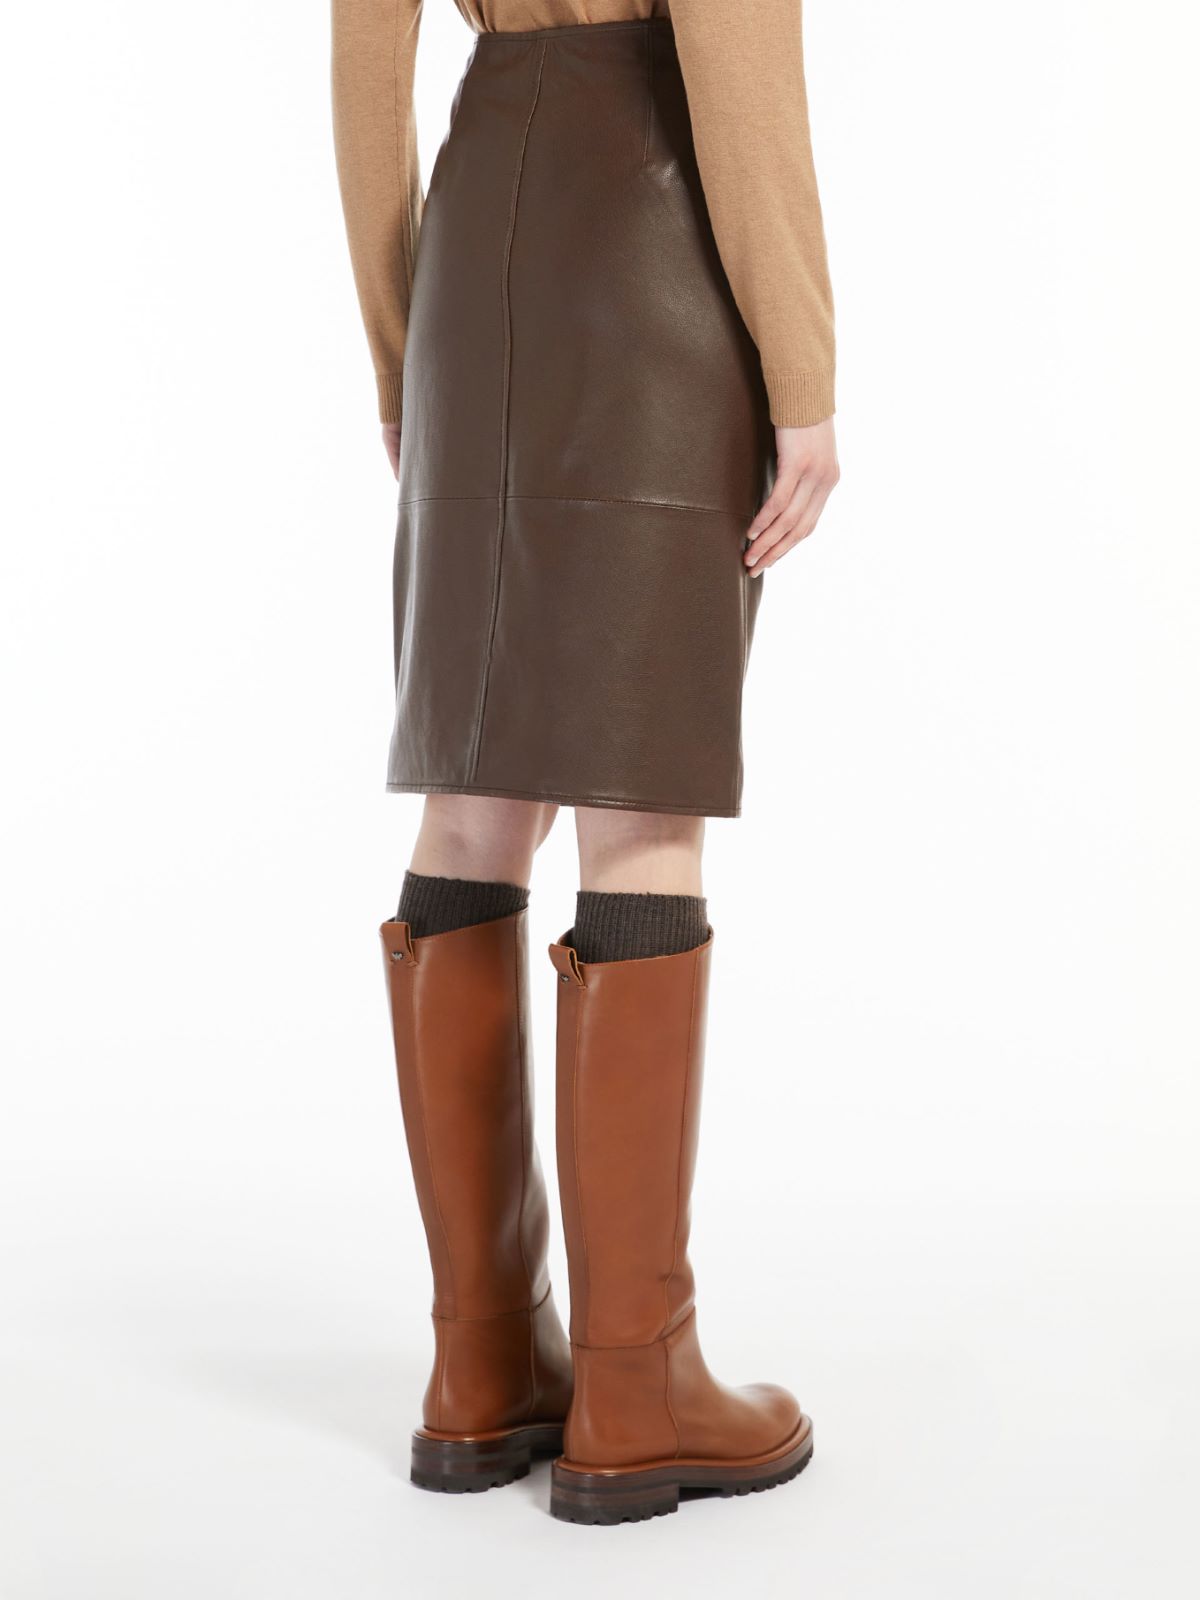 Nappa leather skirt - BROWN - Weekend Max Mara - 3